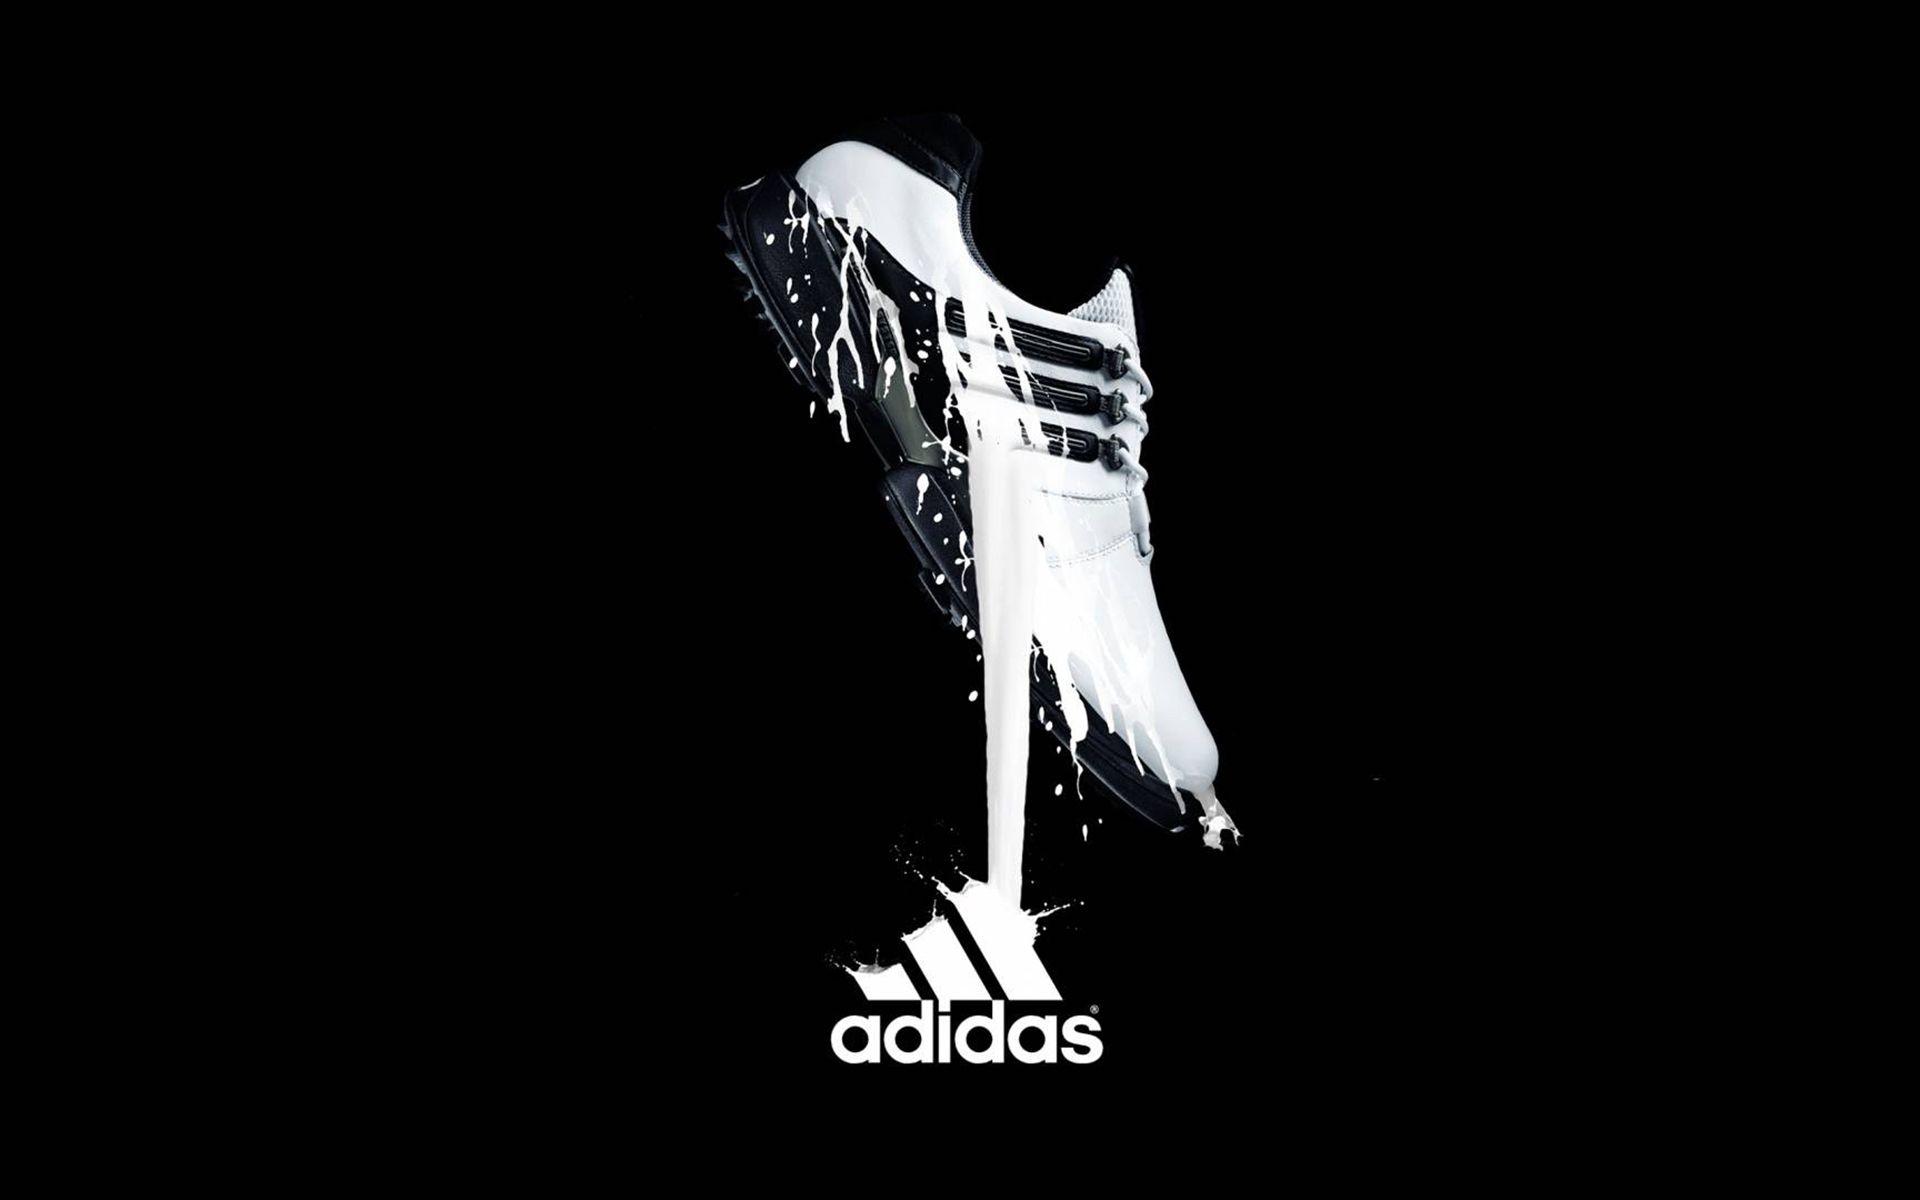 adidas logo hd images download